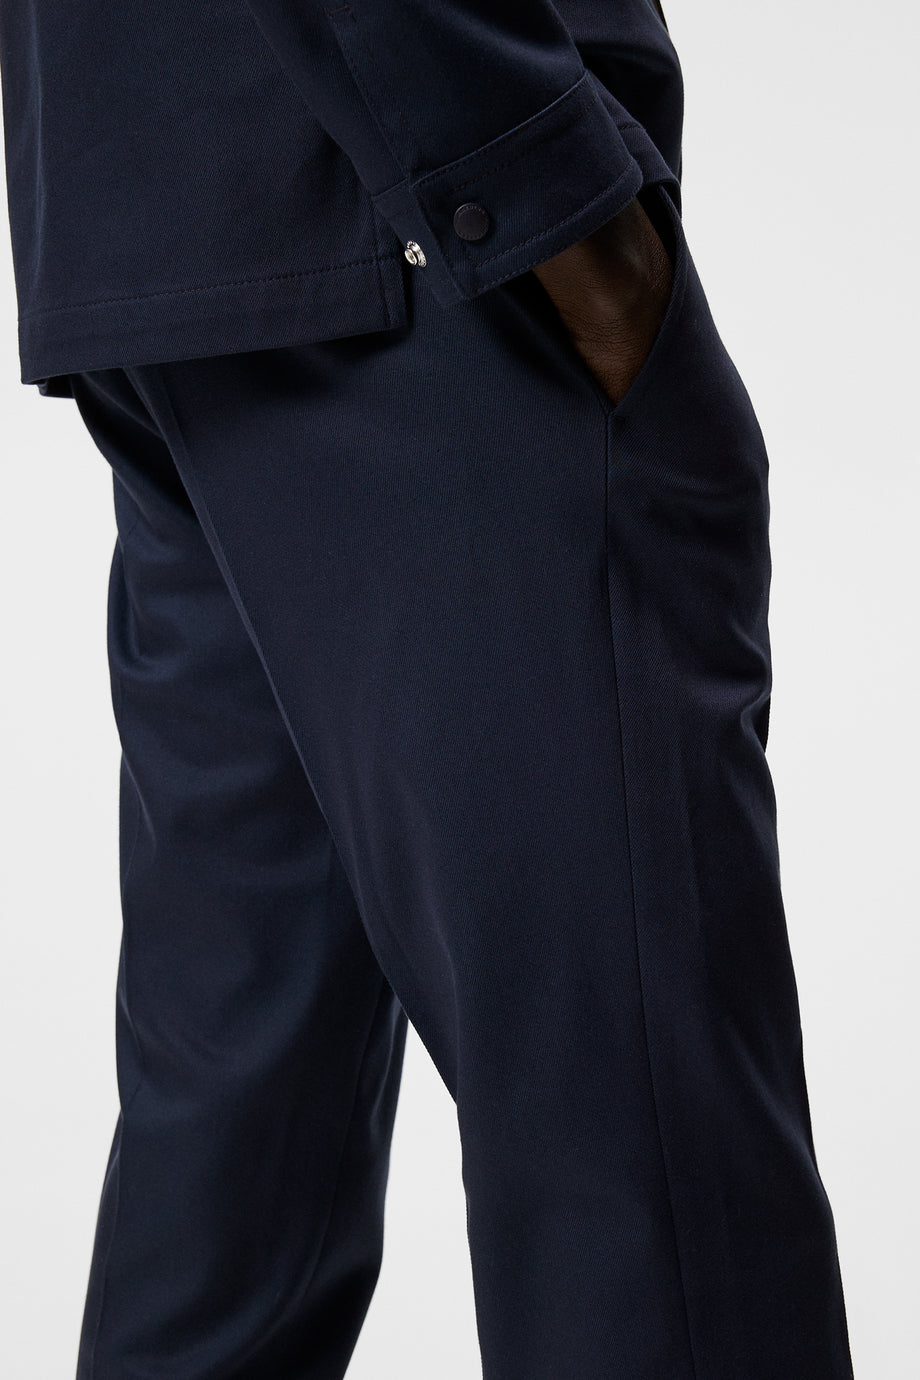 Grant Cotton Stretch Pants / JL Navy